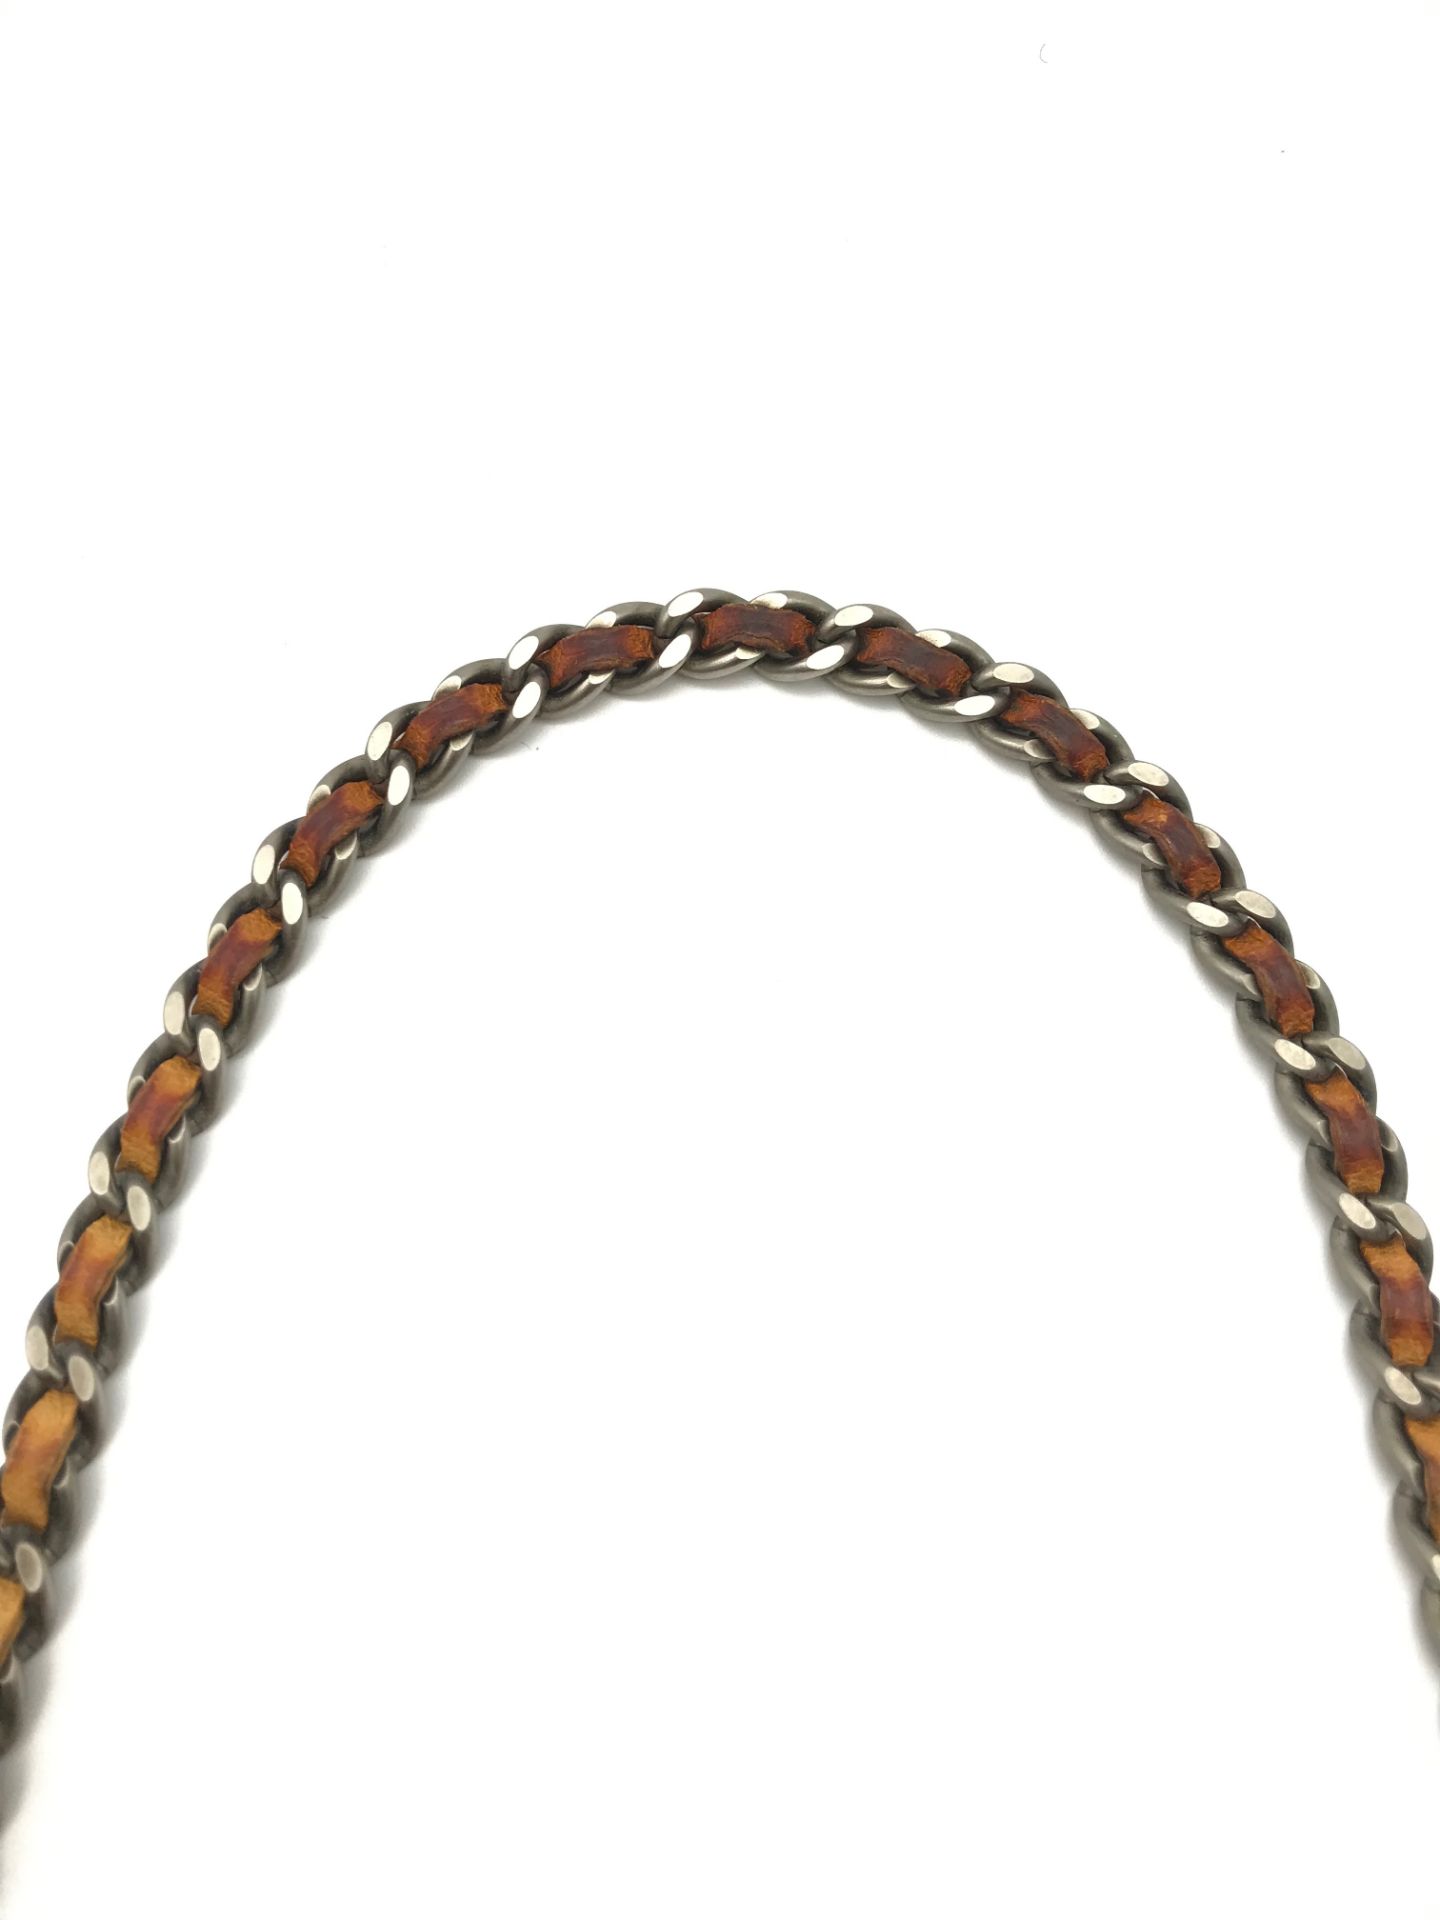 CHANEL Chocolate Bar Digital Chain Strap Shoulder Bag - Image 11 of 13